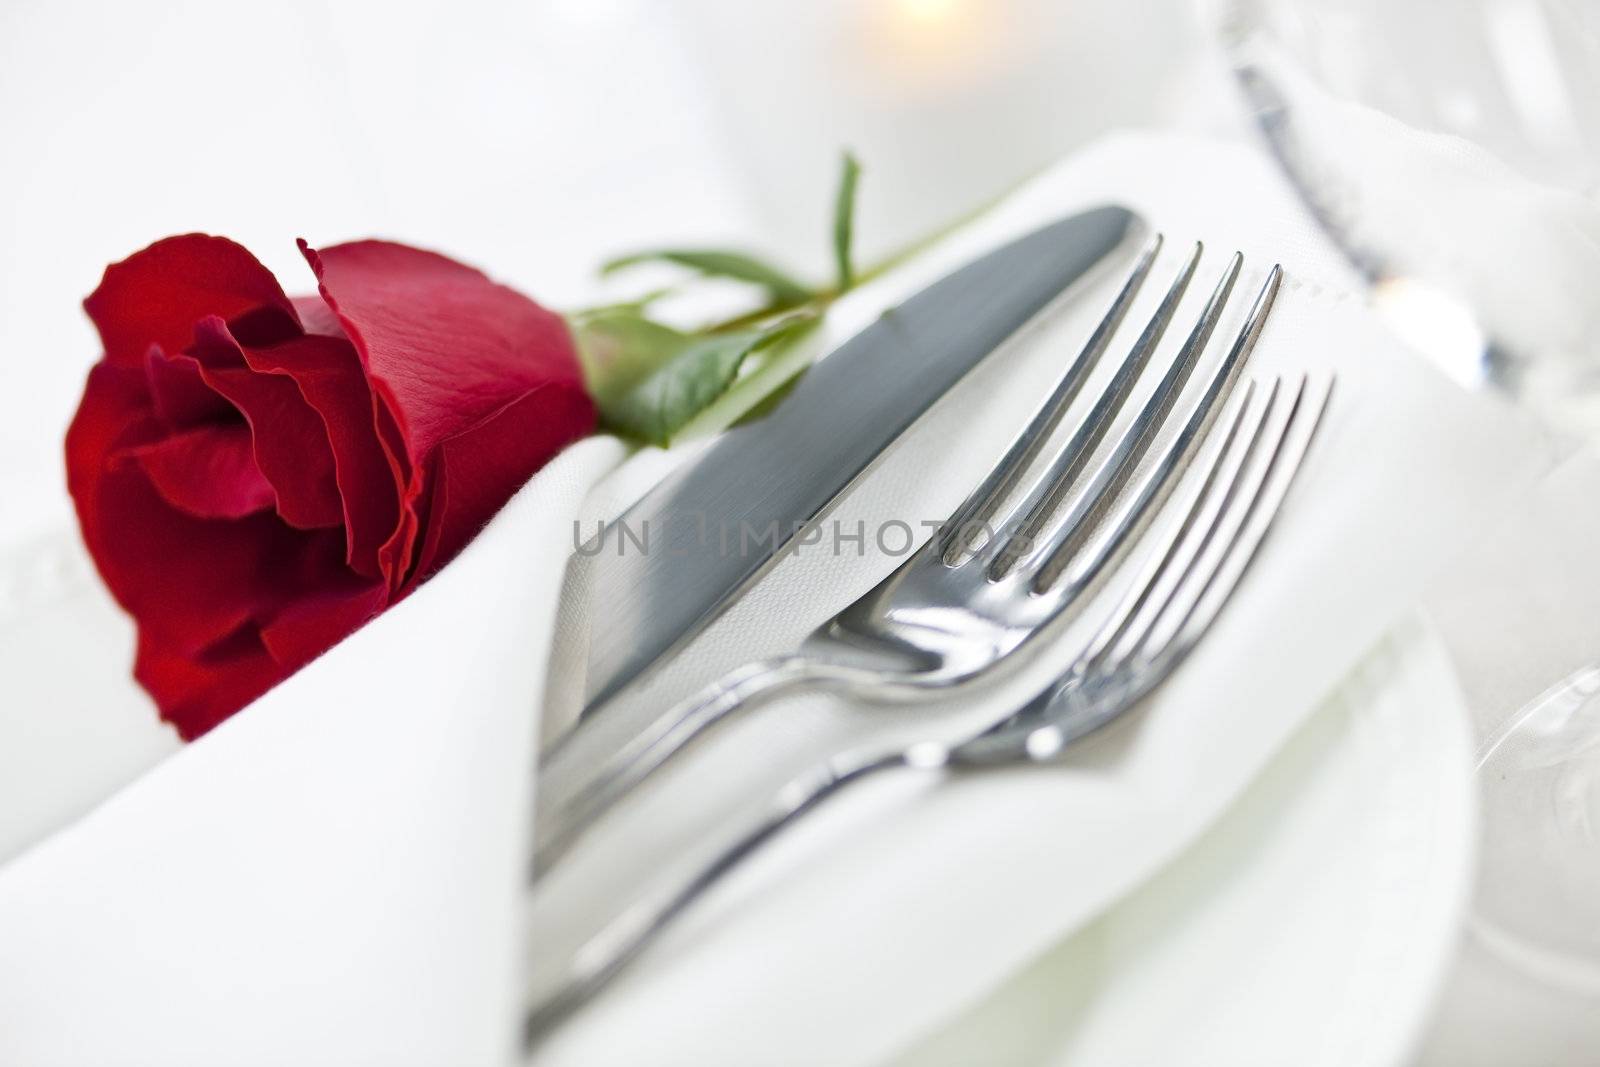 Romantic dinner setting by elenathewise